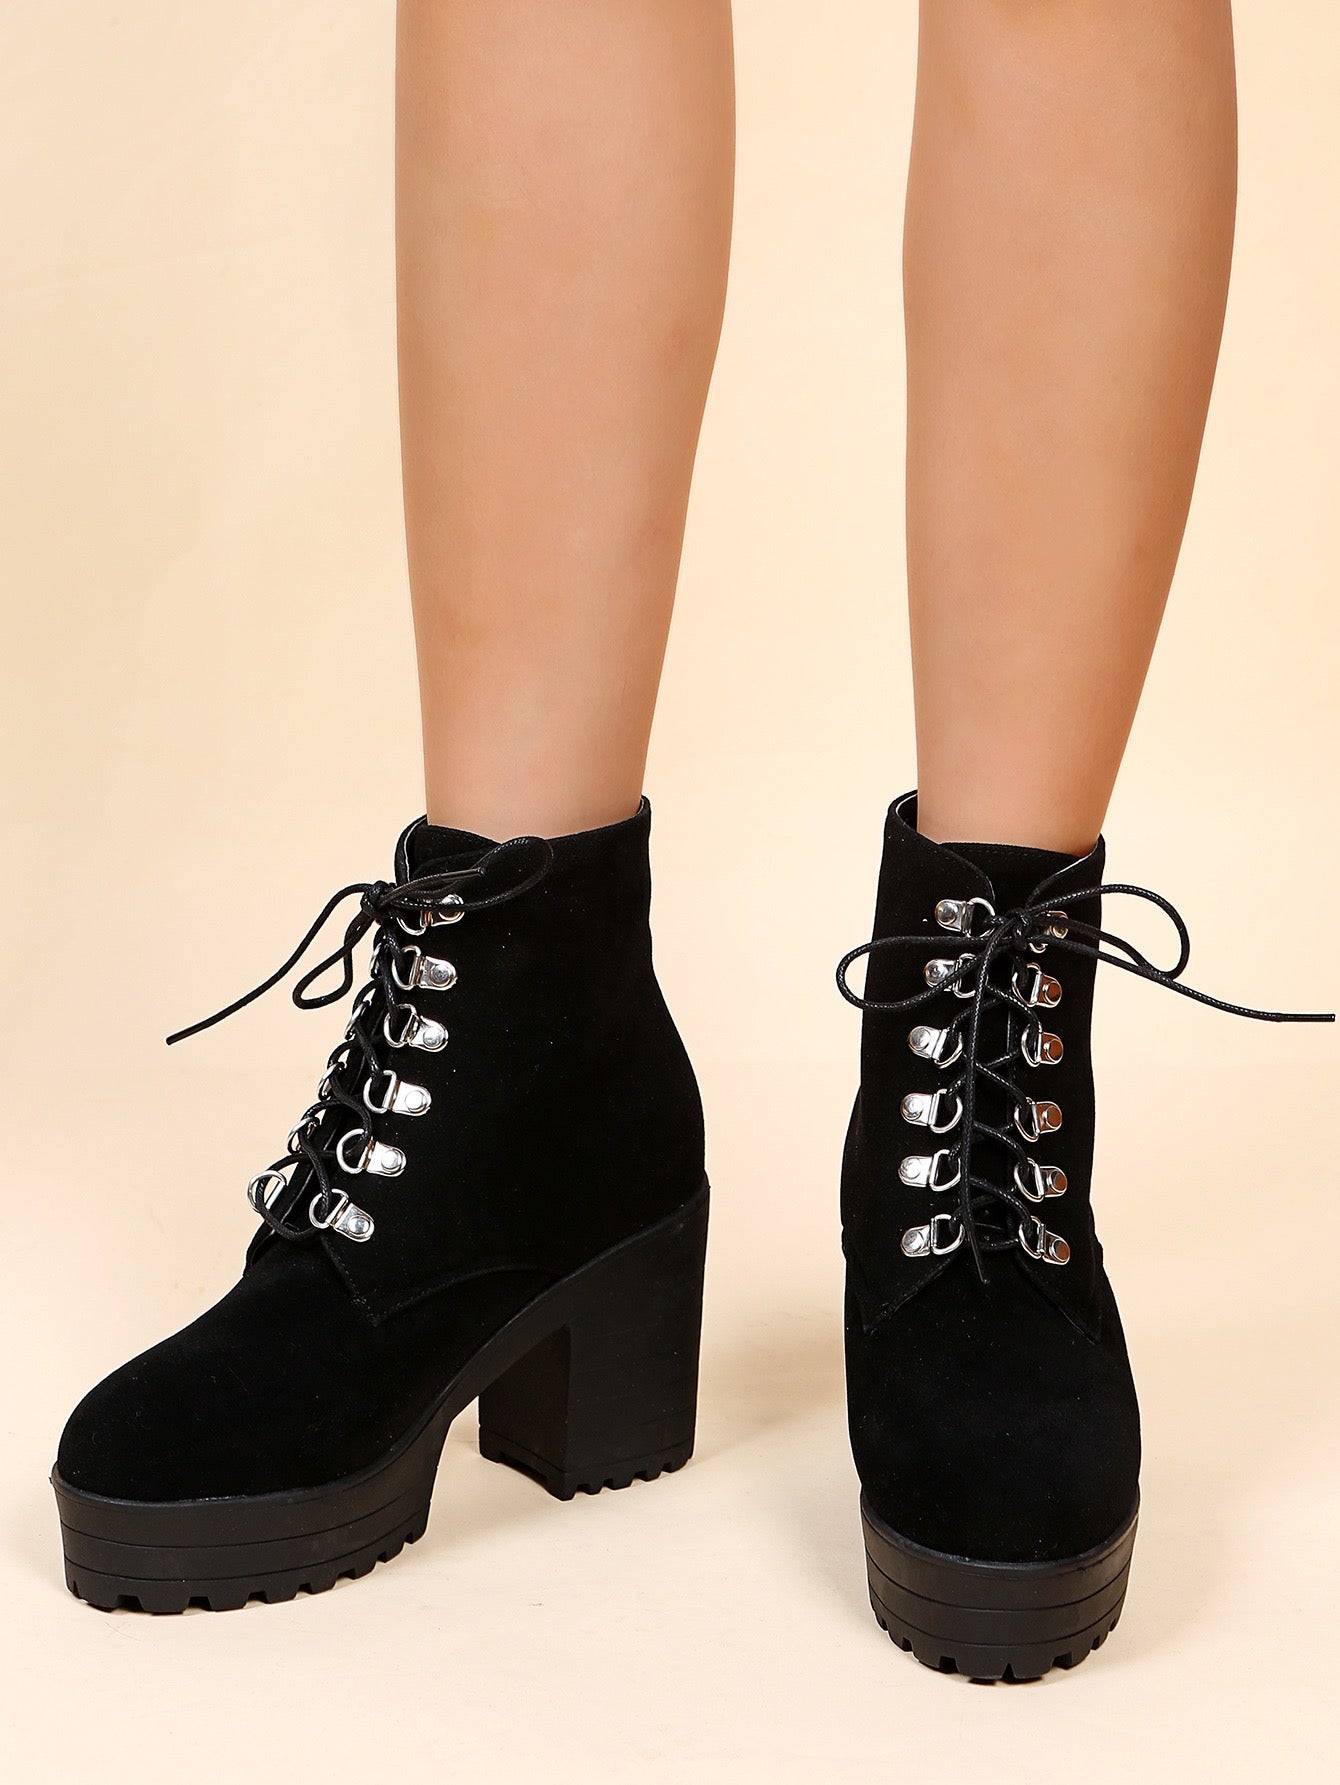 ZIERSO Women Short Faux Suede Lace Up High Heel Platform Boots